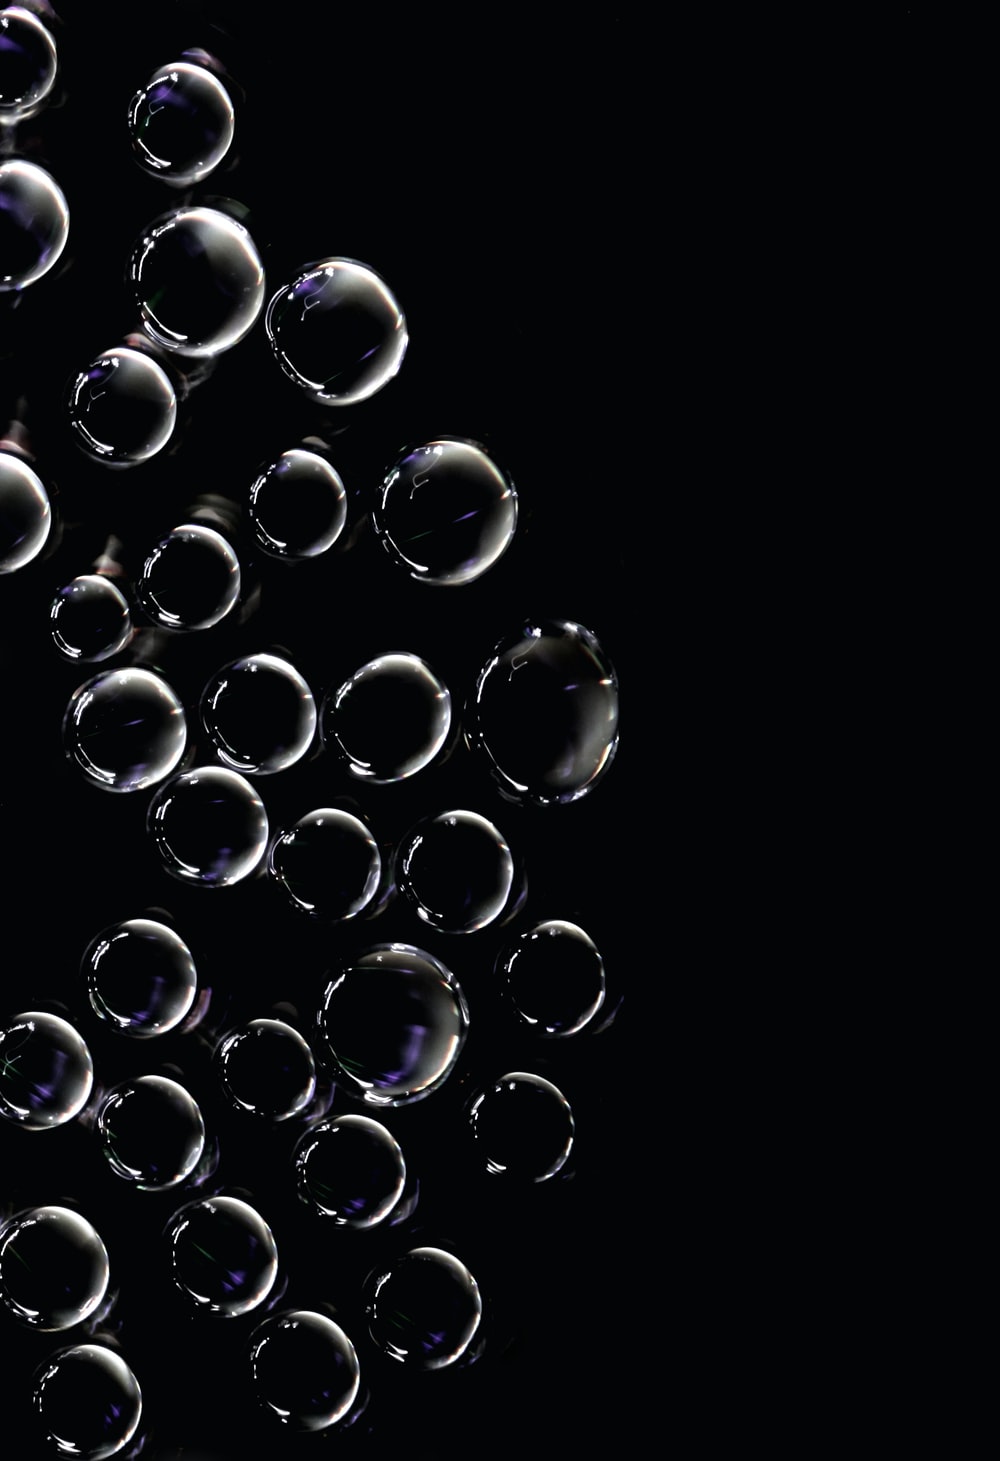 Black And White Bubbles Wallpaper Photo Bubble Image On